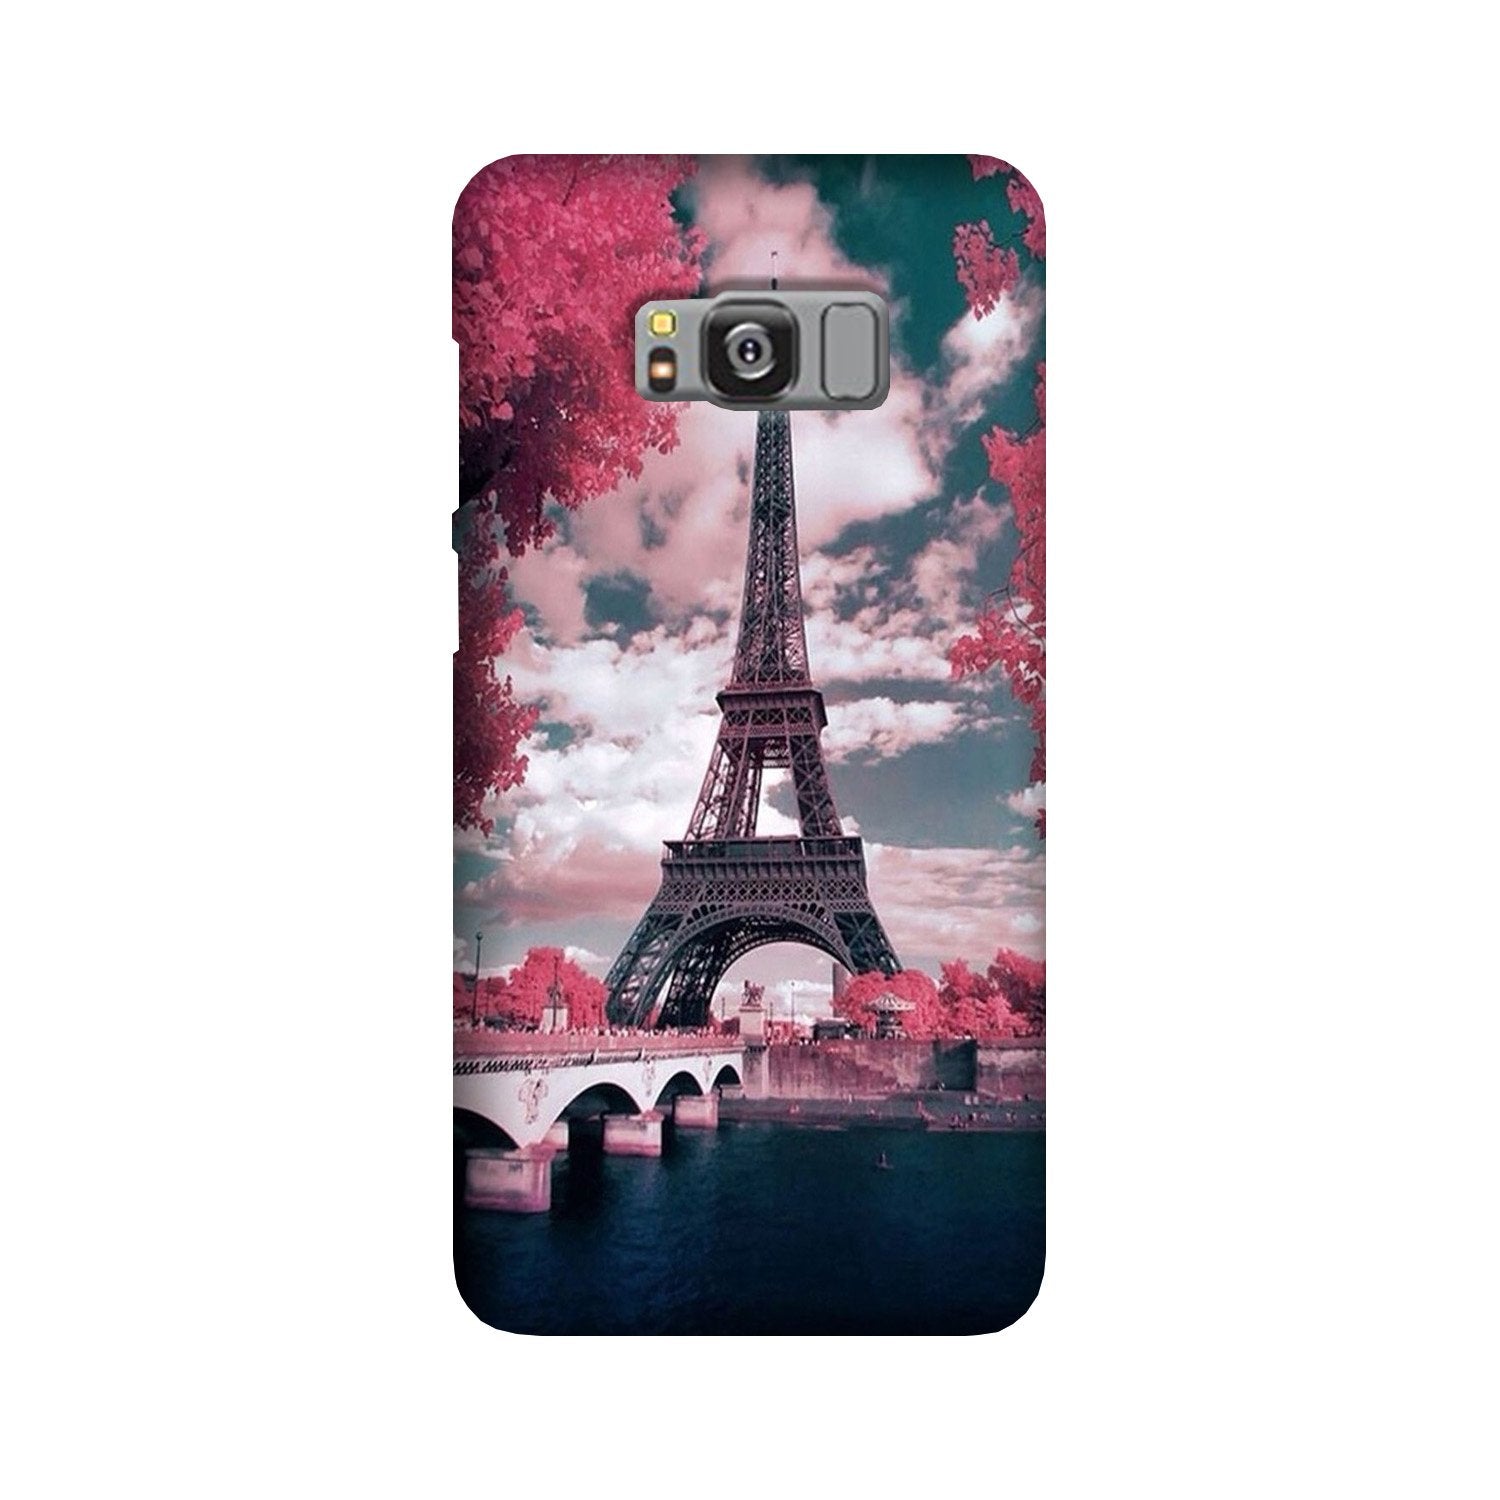 Eiffel Tower Case for Galaxy S8(Design - 101)